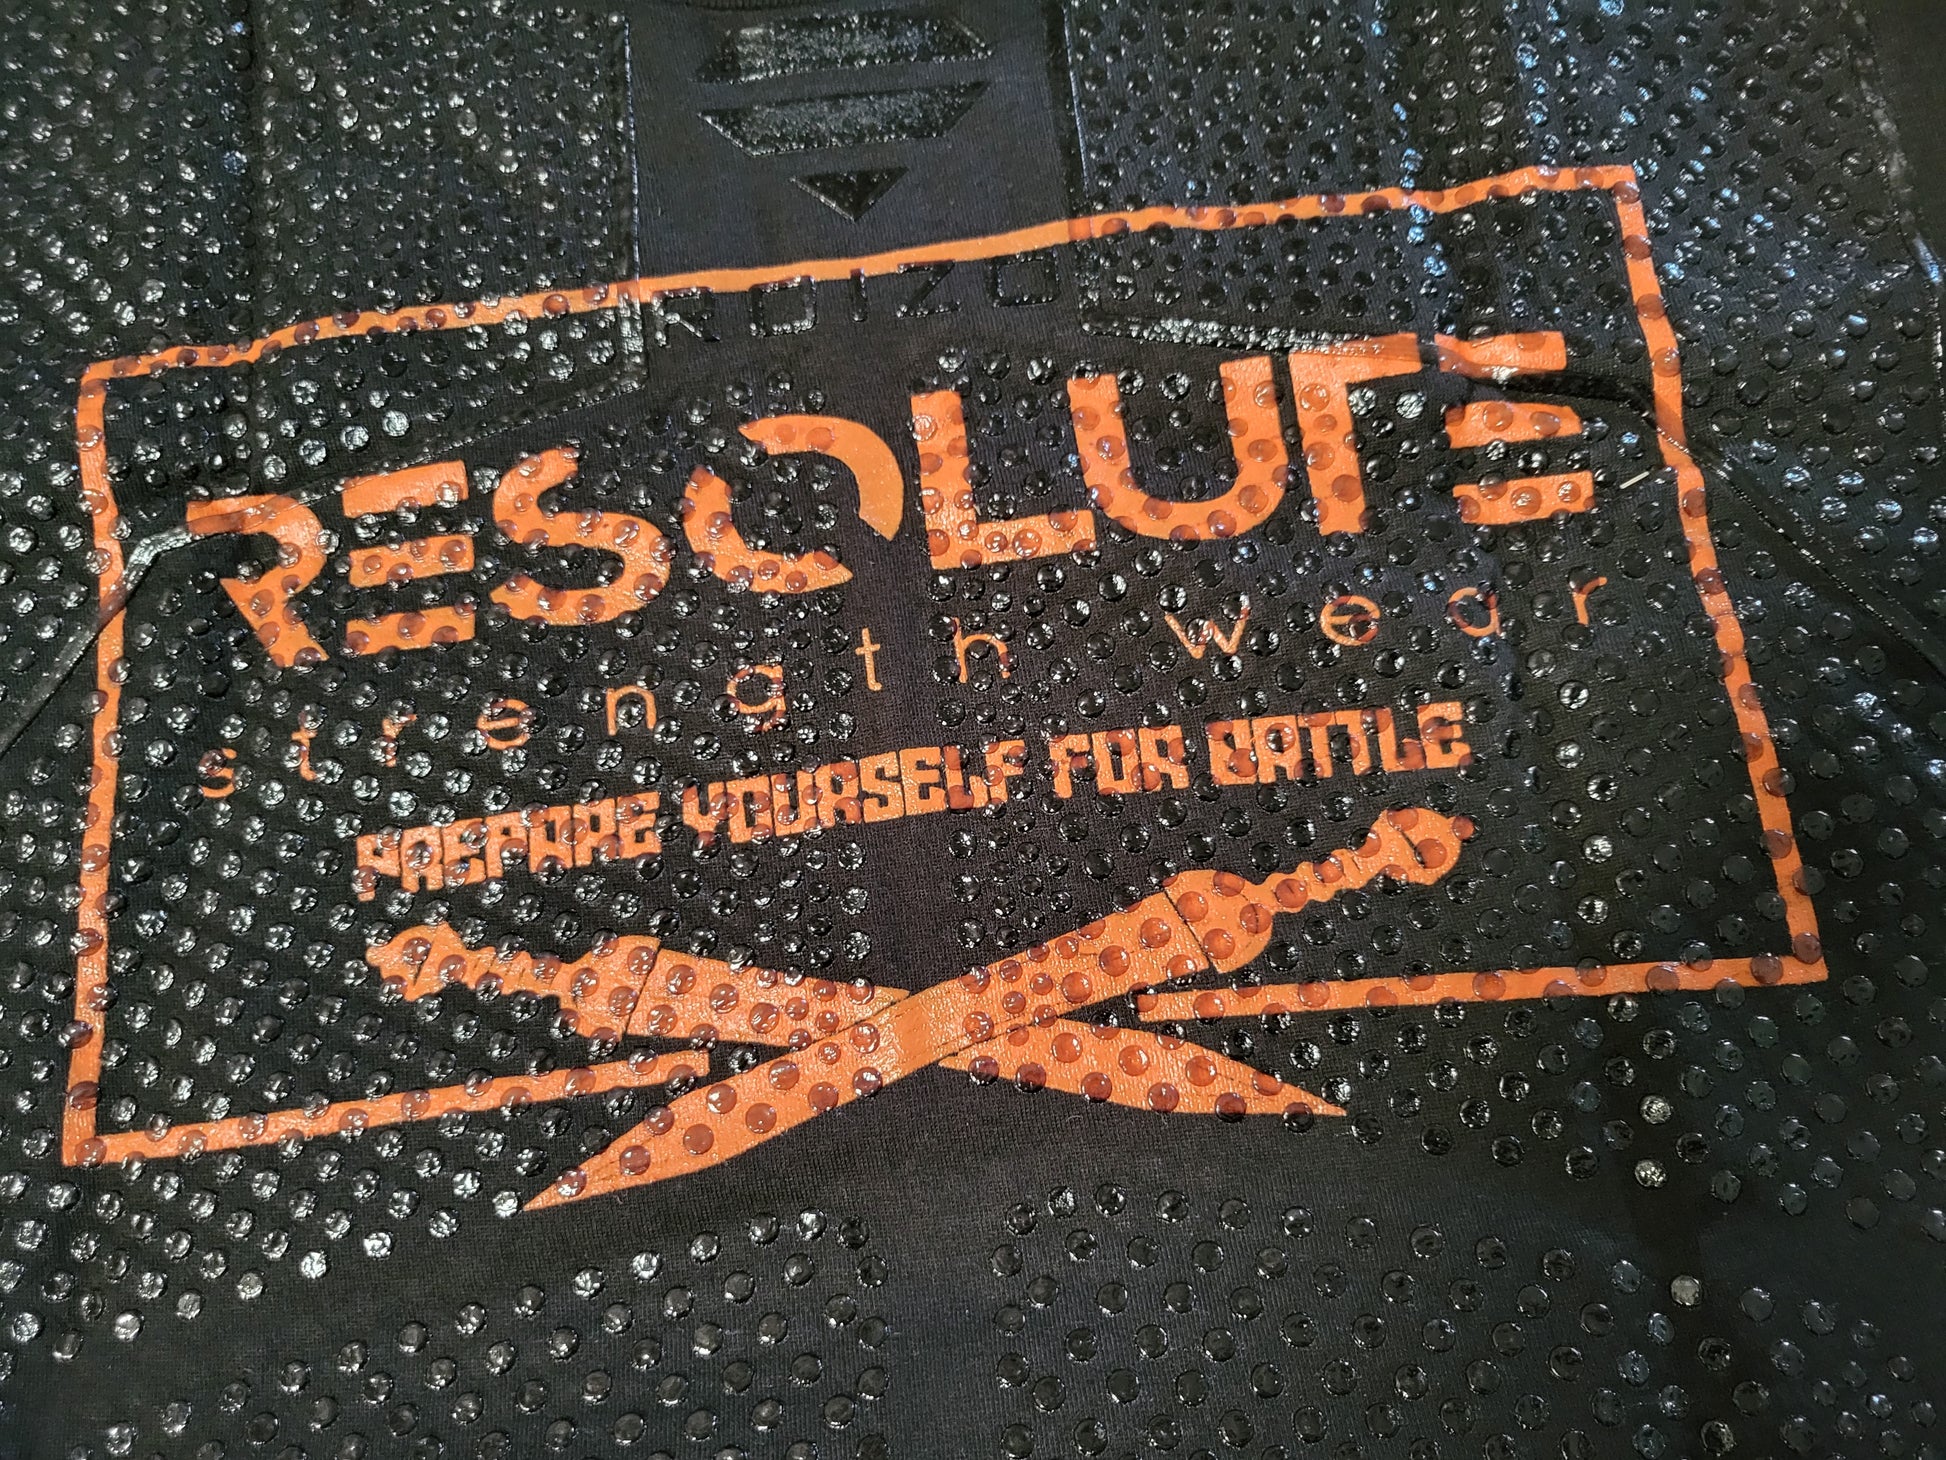 Prepare for Battle Grip shirt - Resolute Strength Wear